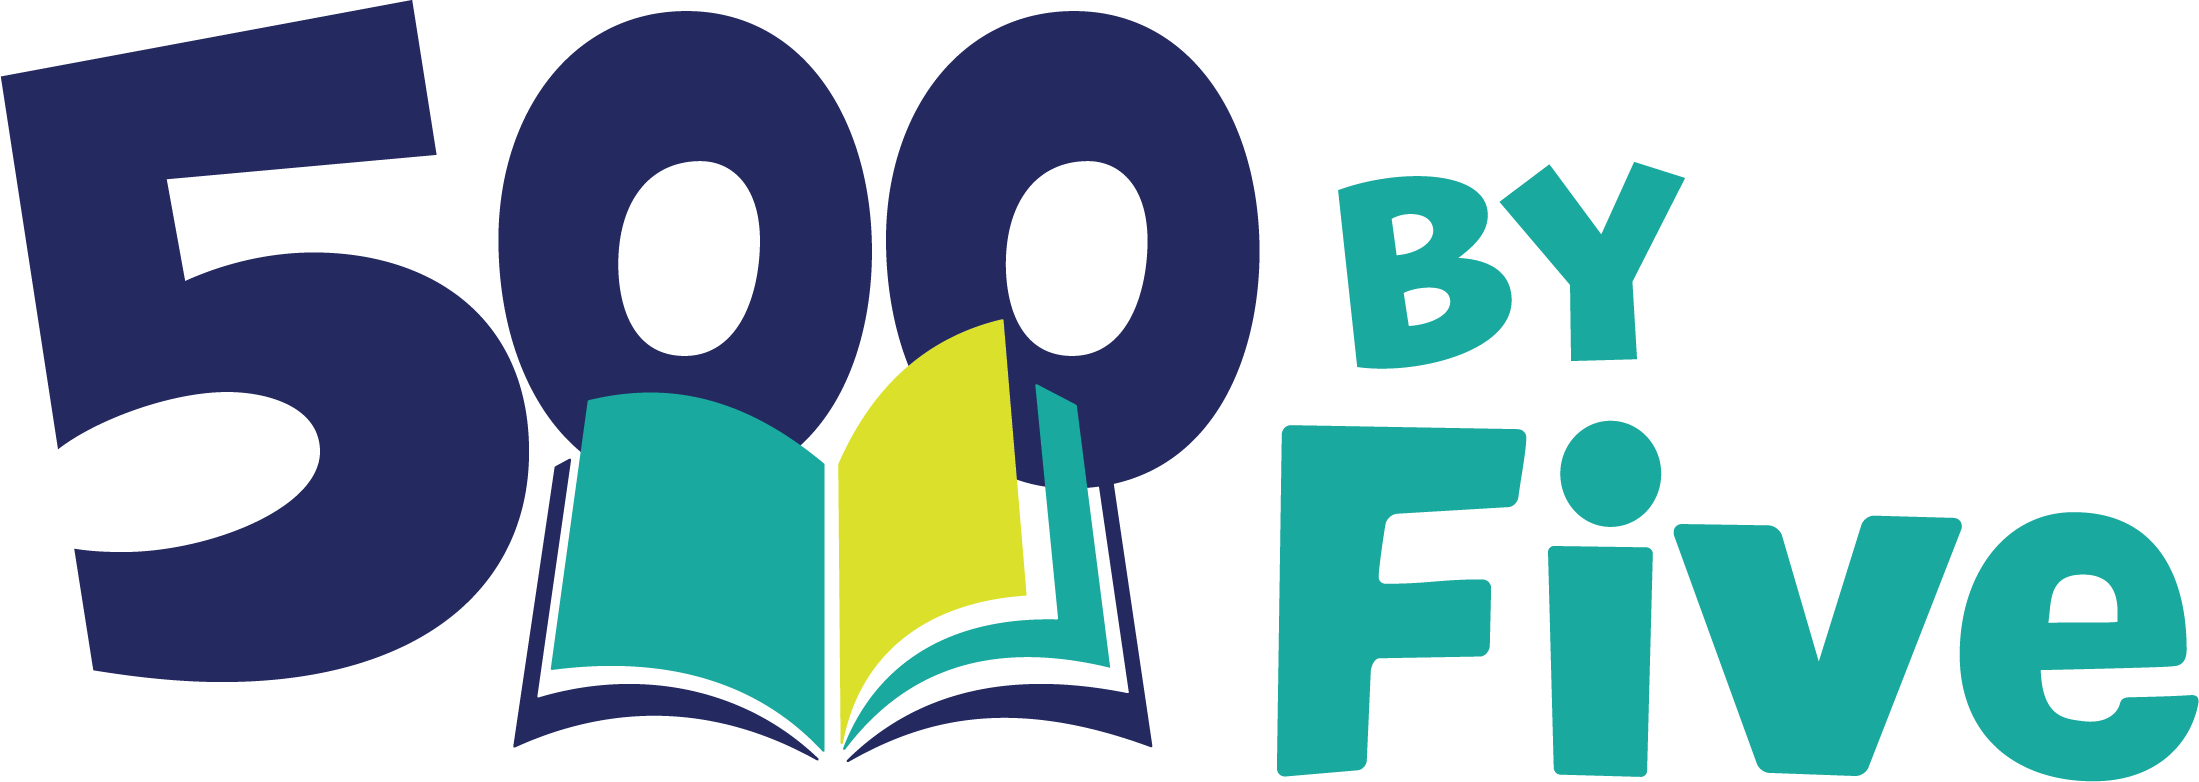 500 by FIVE logo